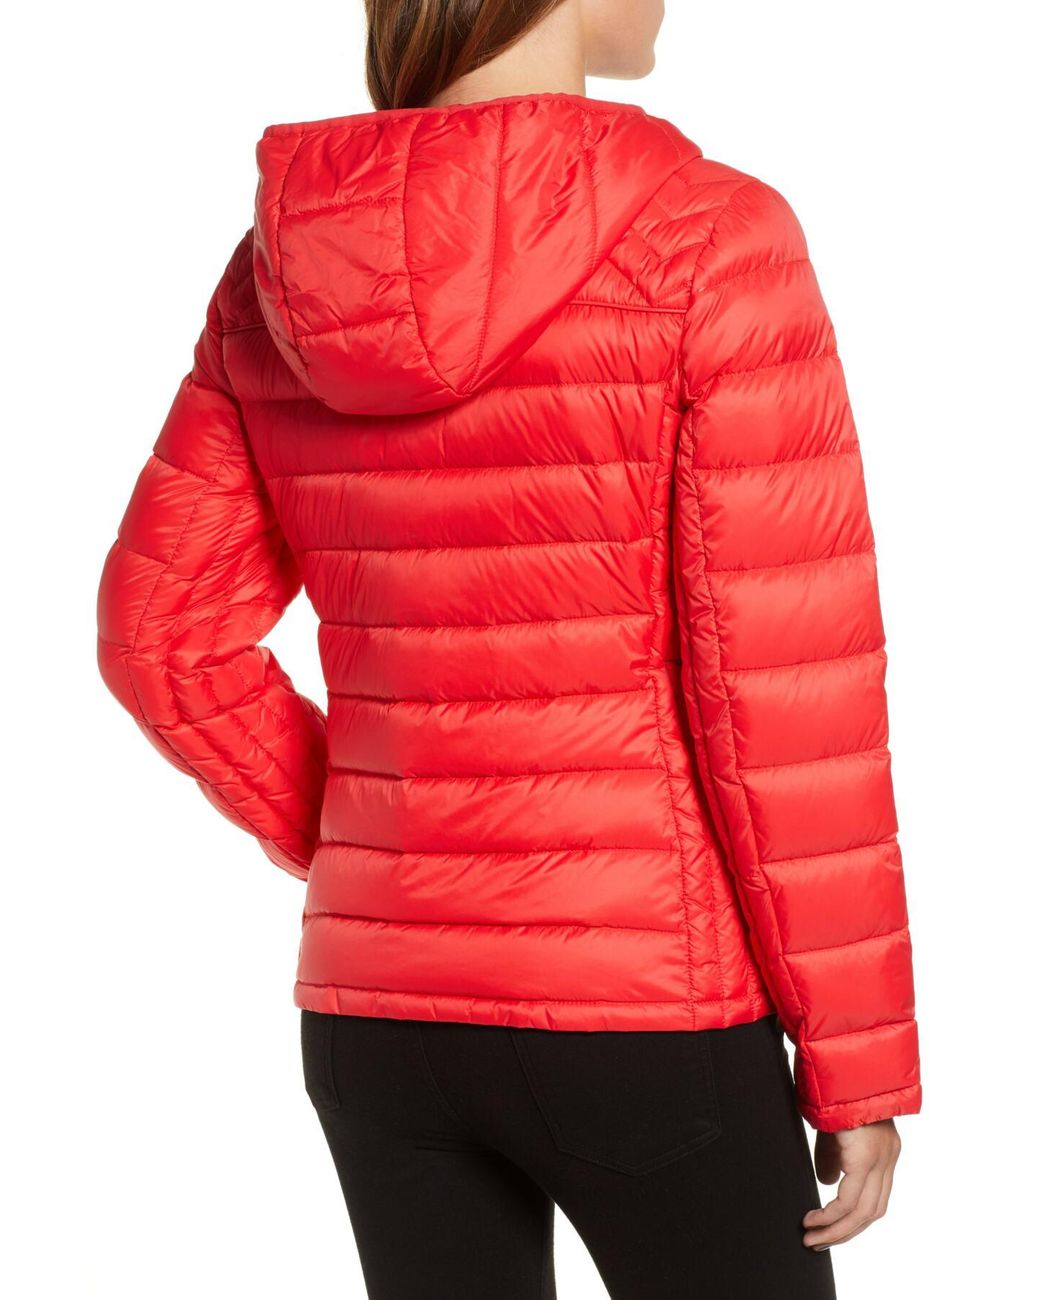 Michael Kors Womens Hooded Packable Down Puffer Coat Created for Macys   Macys